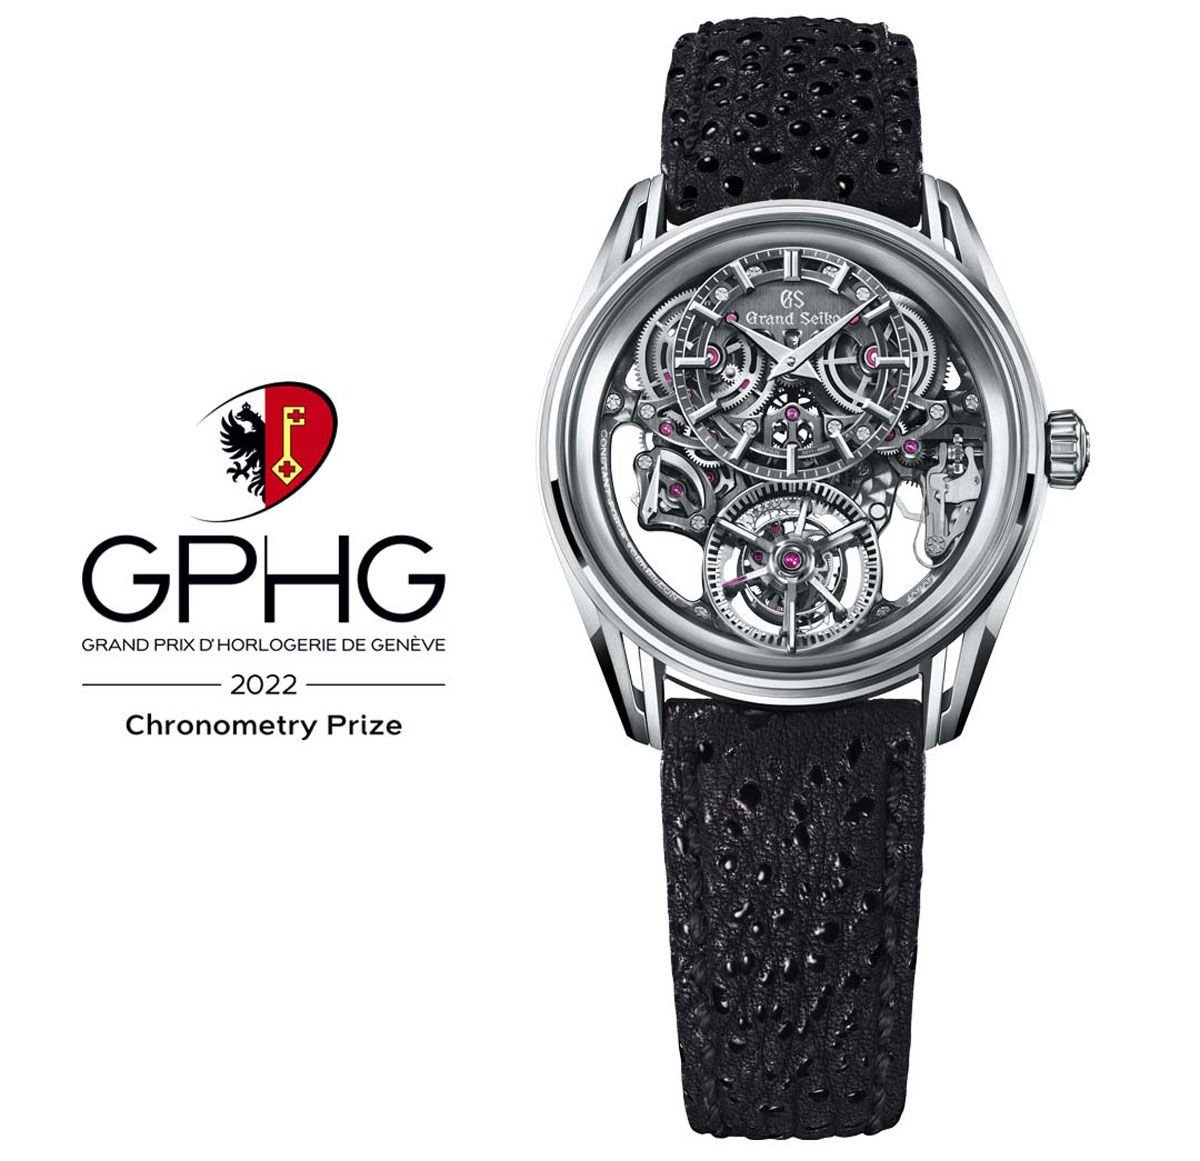 Grand Seiko Kodo Constant-force Tourbillon, Grand Prix d’Horlogerie de Genève 2022’de Chronometry Ödülü’nü kazandı.